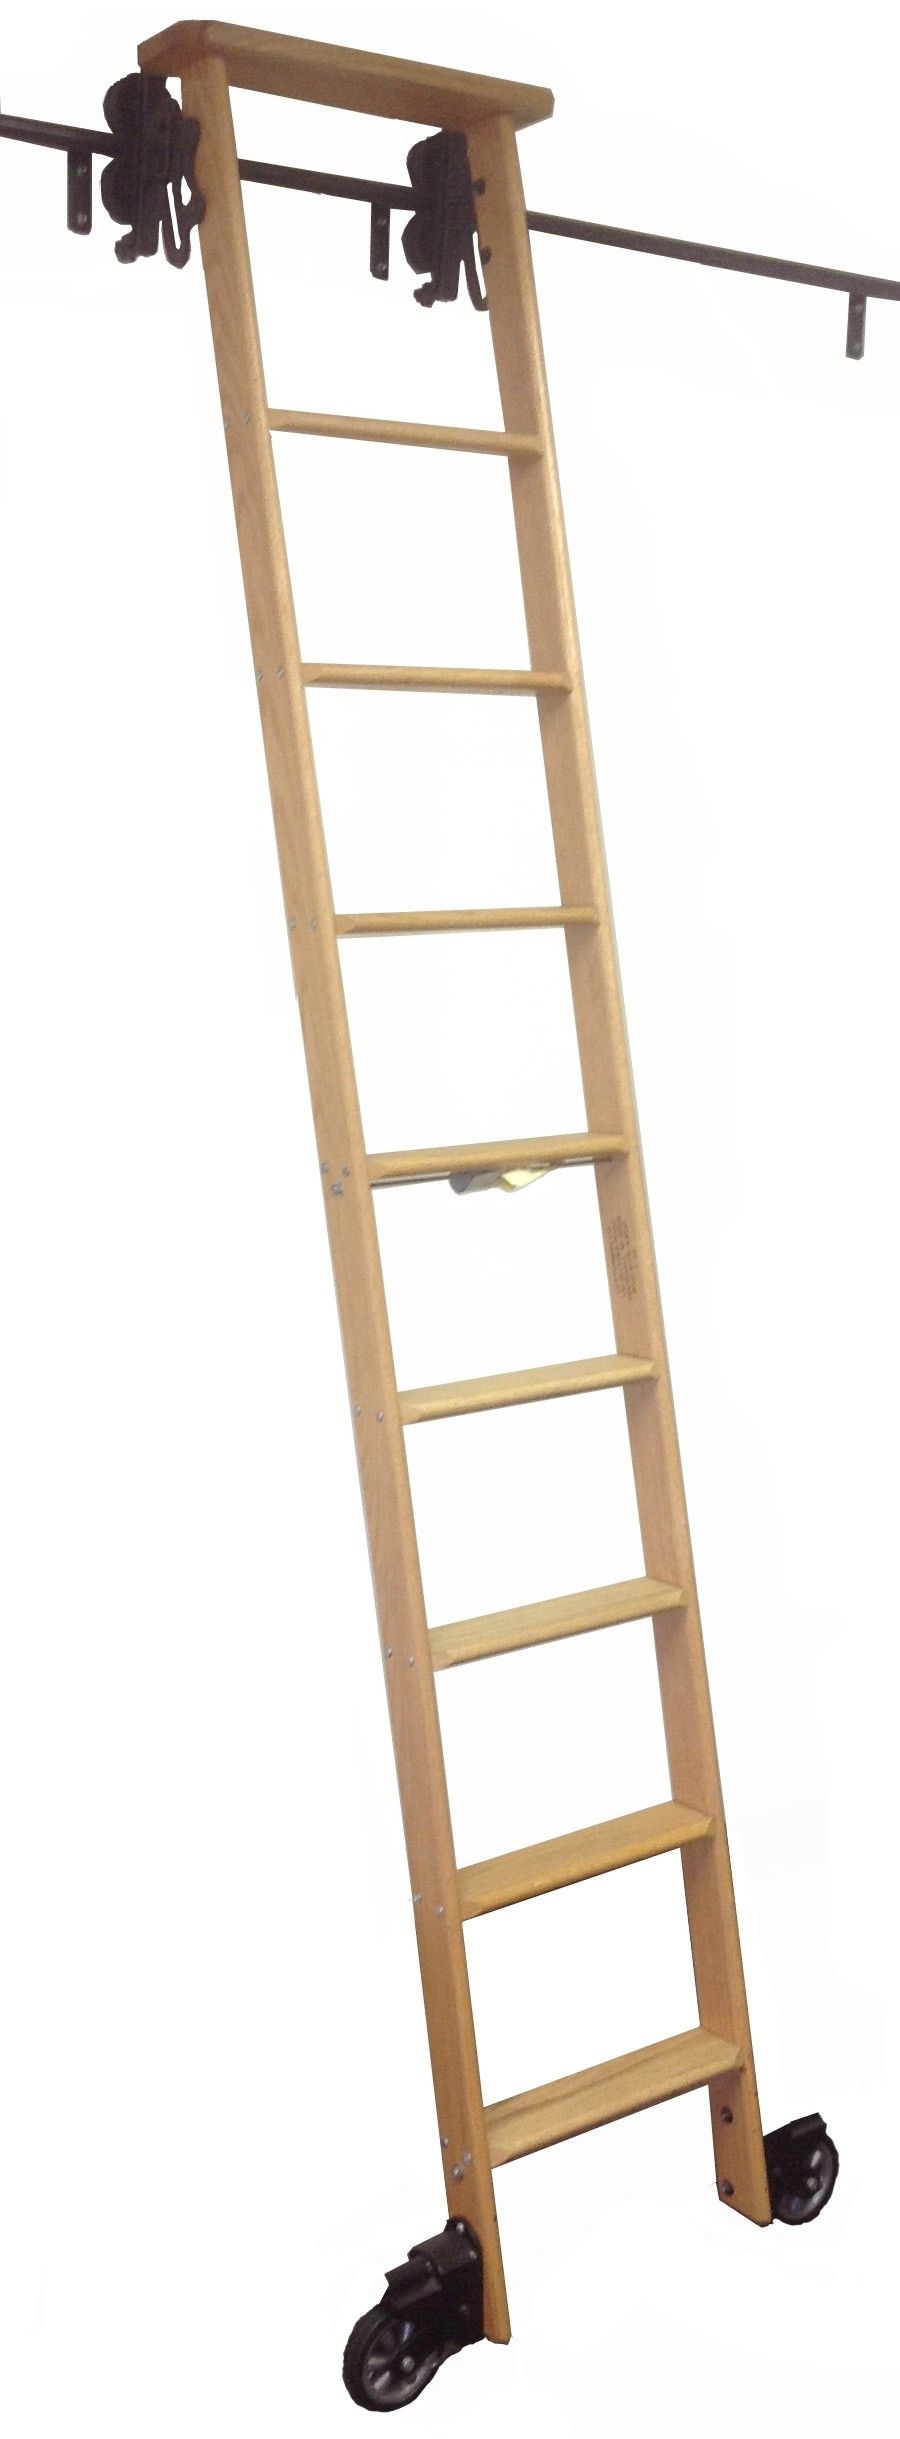 Black Finish Rolling Library Ladder Kits Pertaining To Rolling Library Ladder (View 8 of 15)